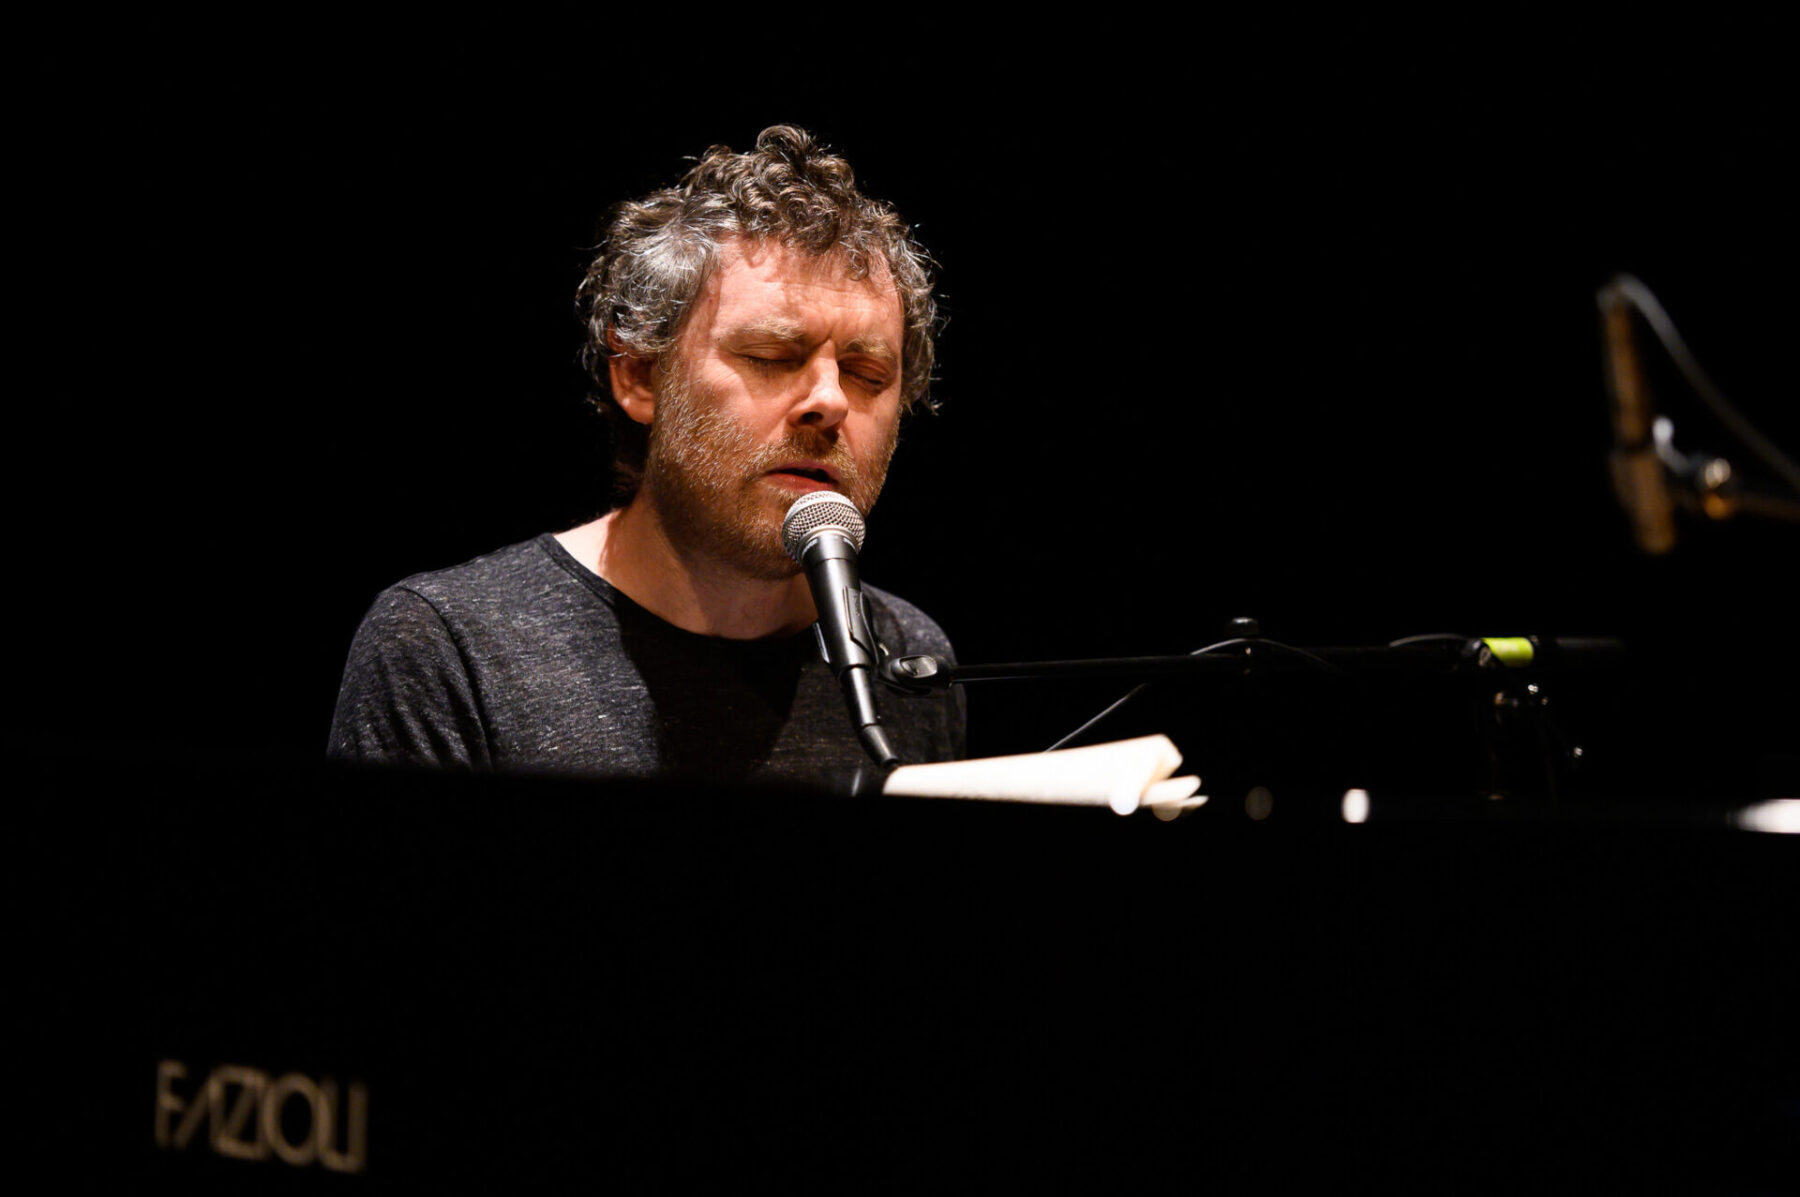 Gabriel Kahane singing into at a microphone at a piano